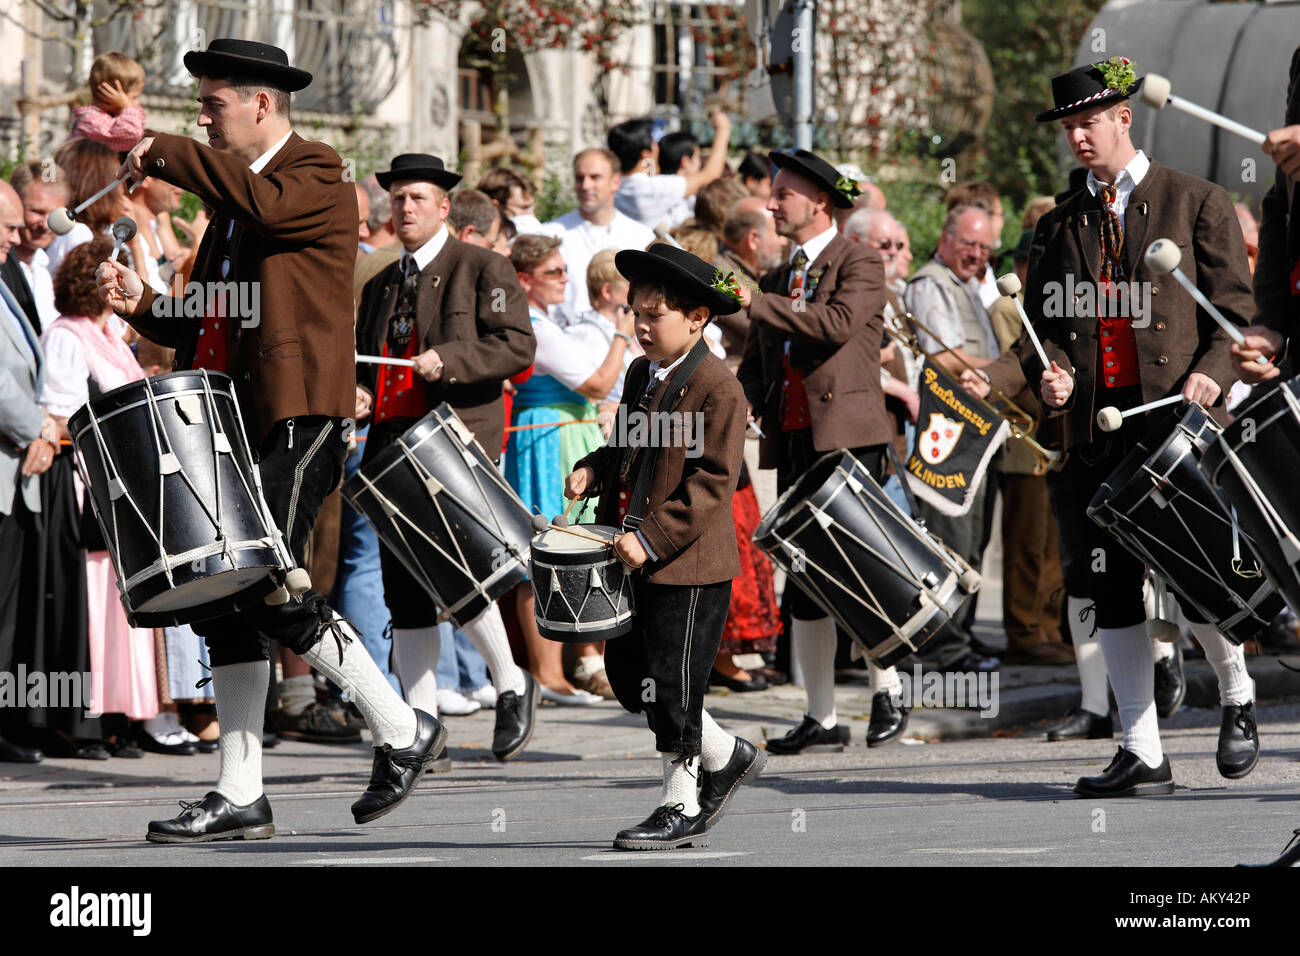 Apertura tradicional desfile, el Oktoberfest, el festival de la cerveza de Munich, Baviera, Alemania Foto de stock